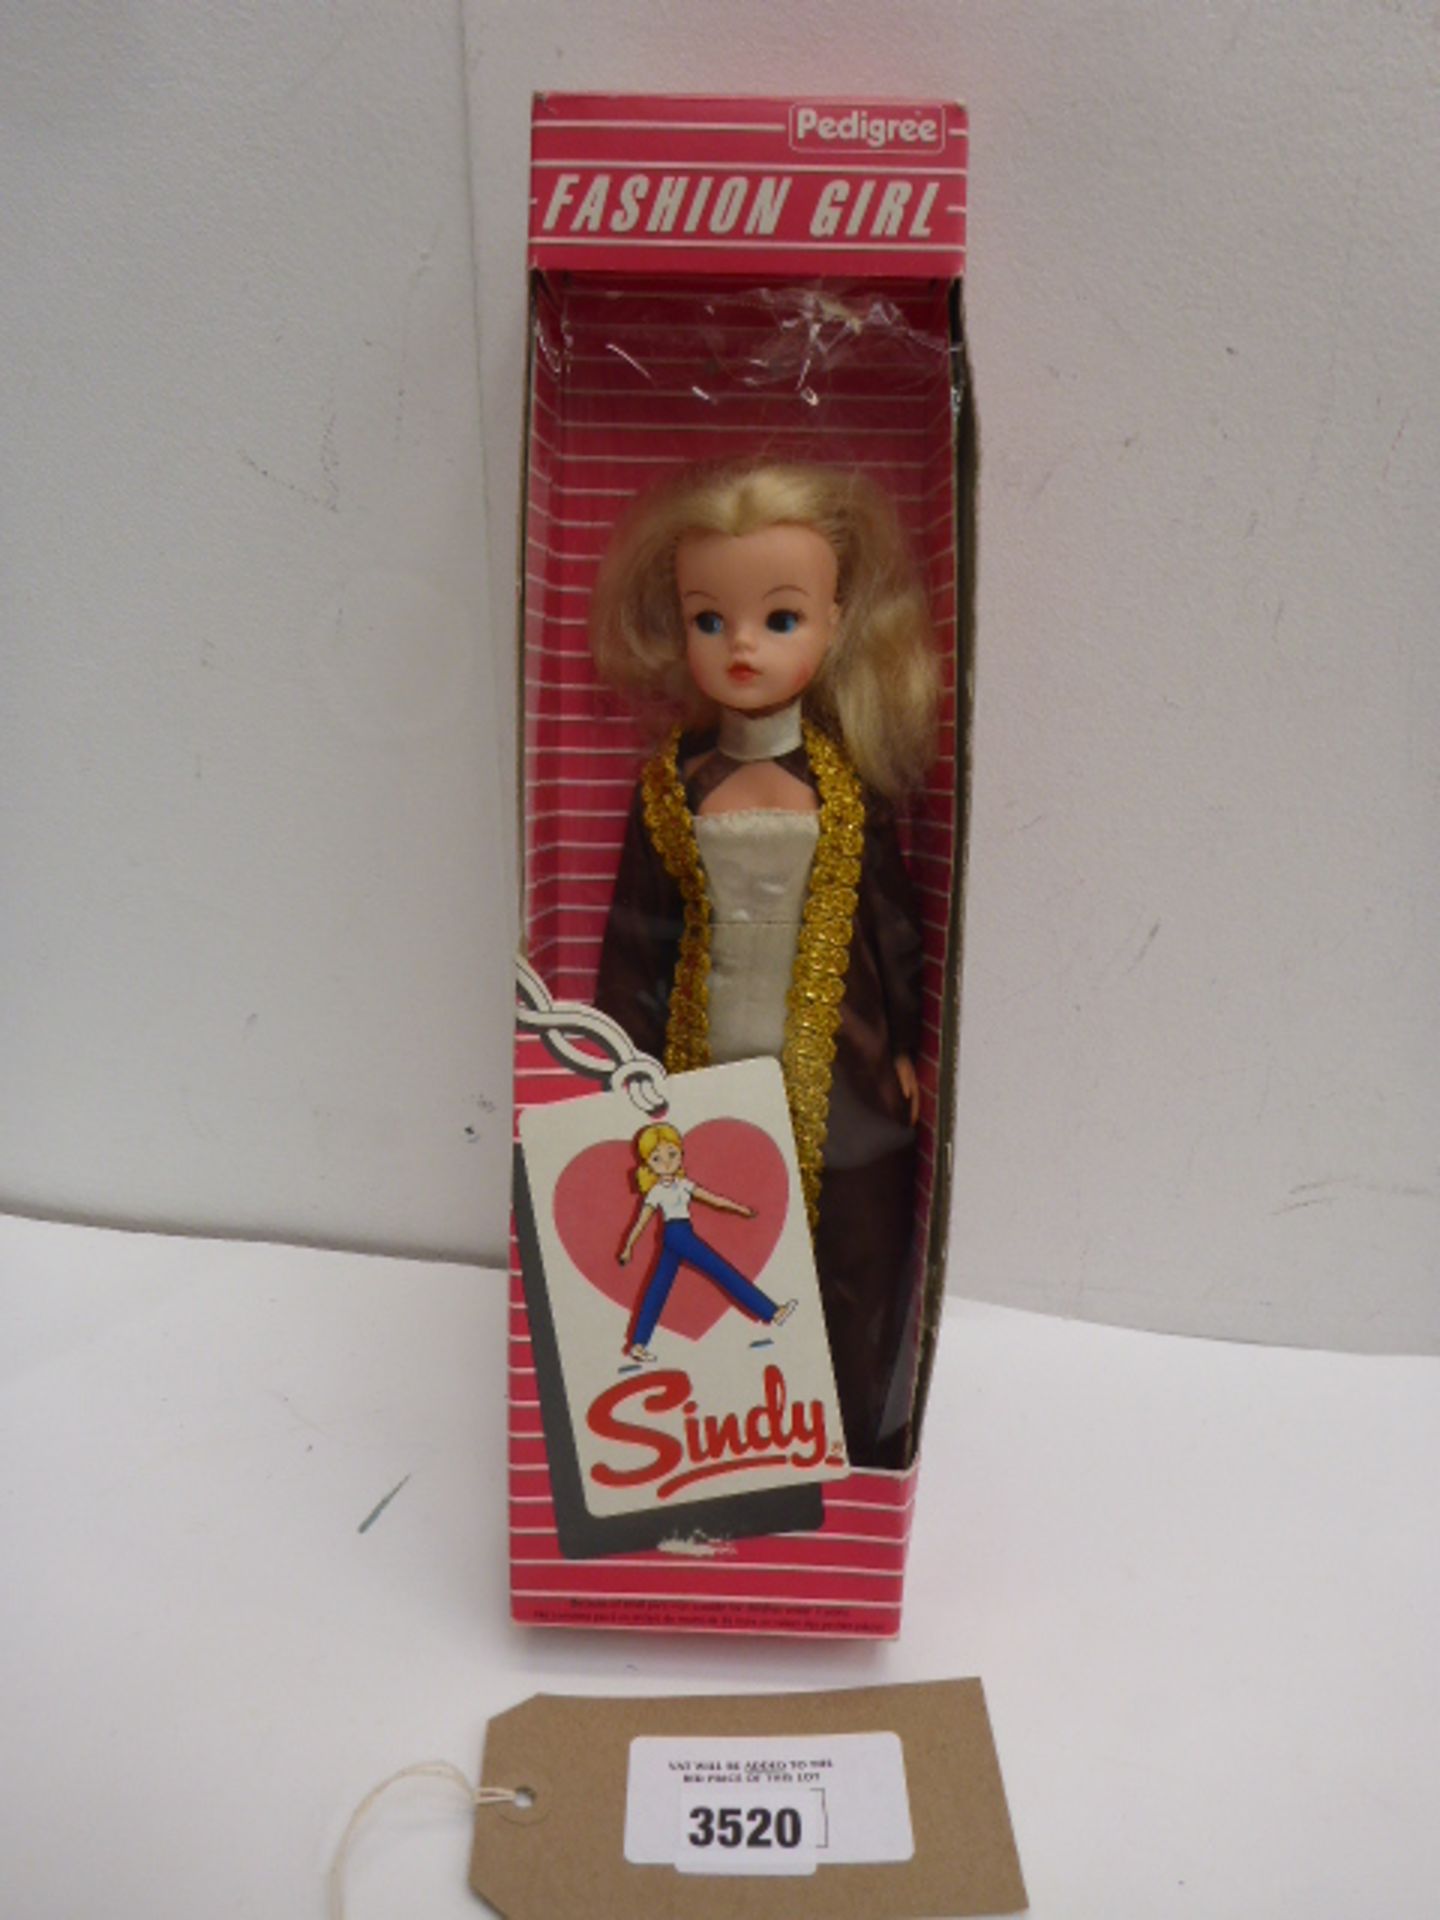 Pedigree Sindy Fashion doll